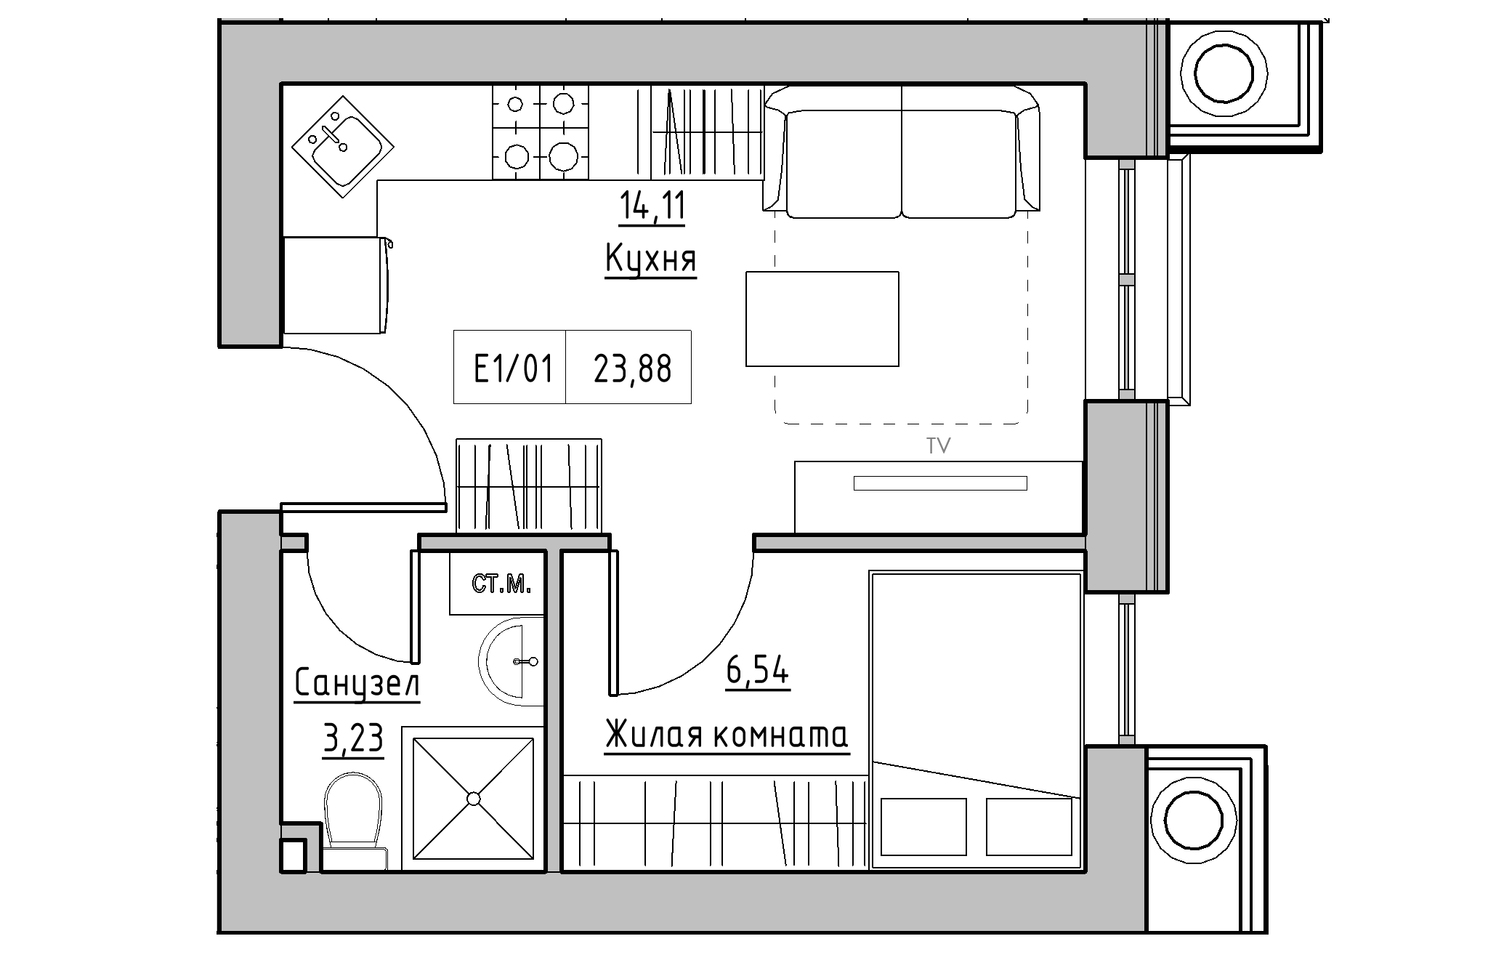 Planning 1-rm flats area 23.88m2, KS-010-03/0011.